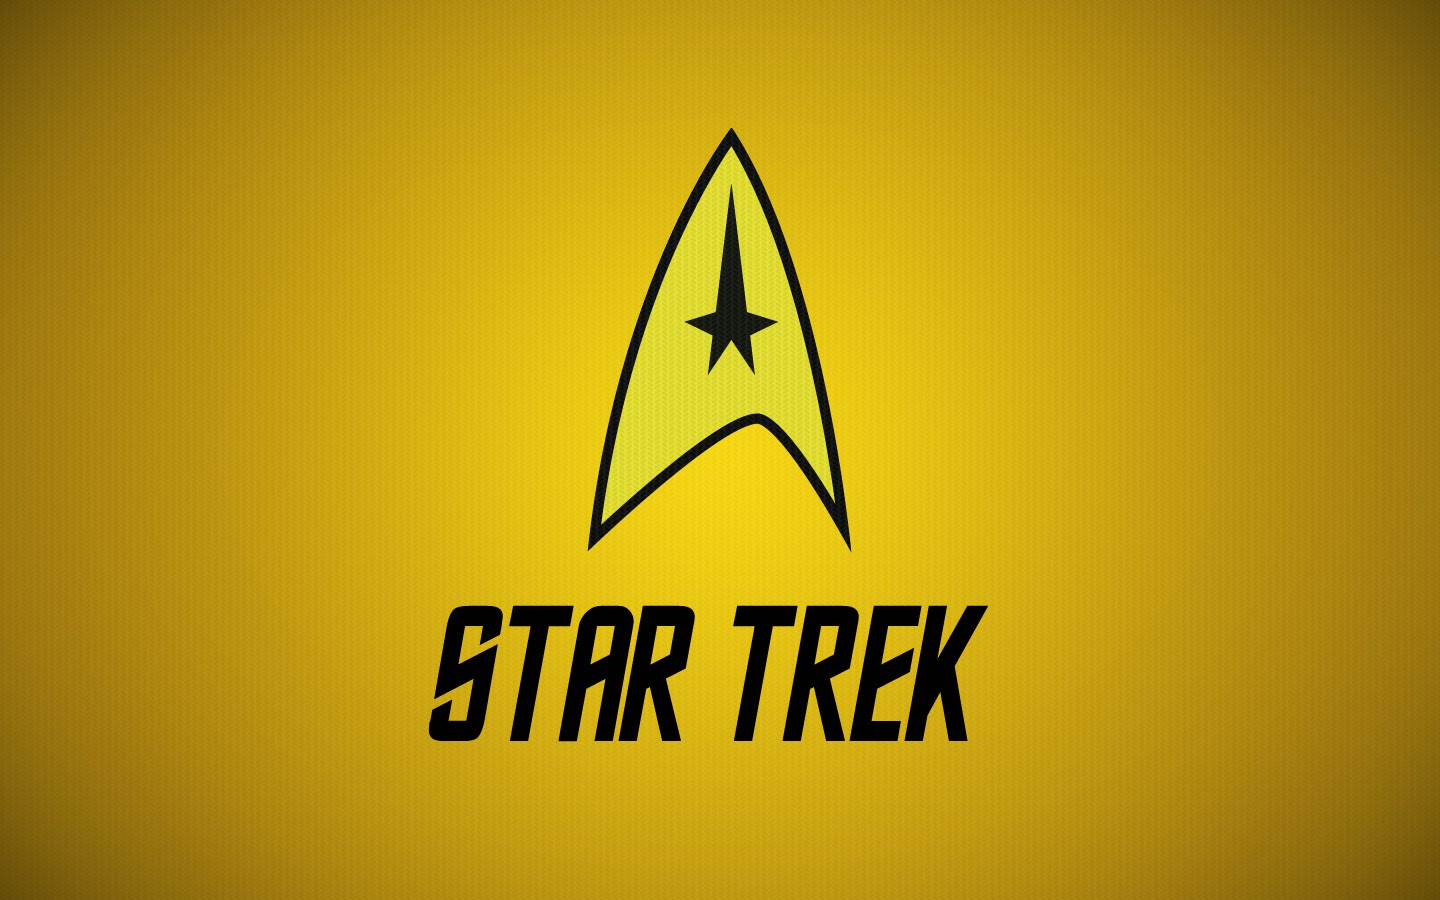 Star trek logo Wallpaper